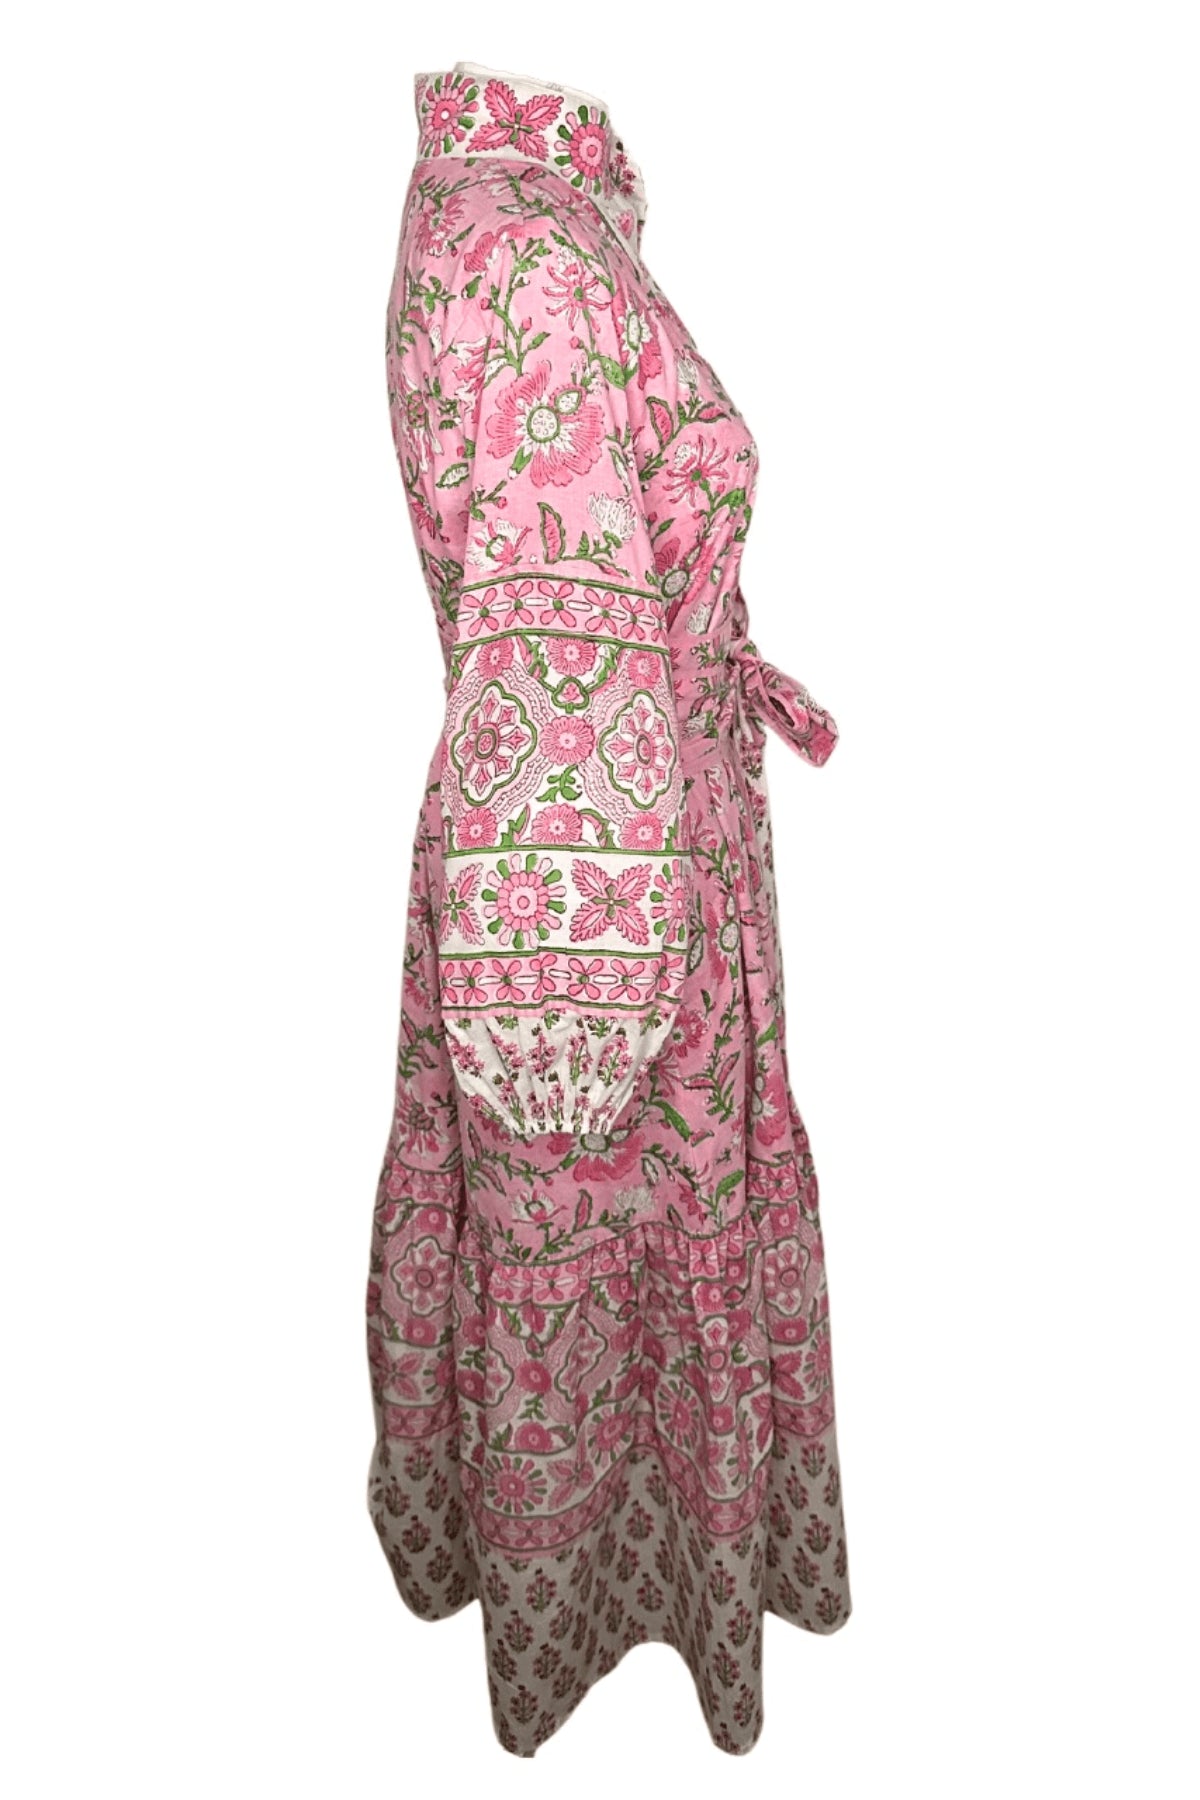 Sue Sartor Flounce Dress in Pink & Green Garden Party Print